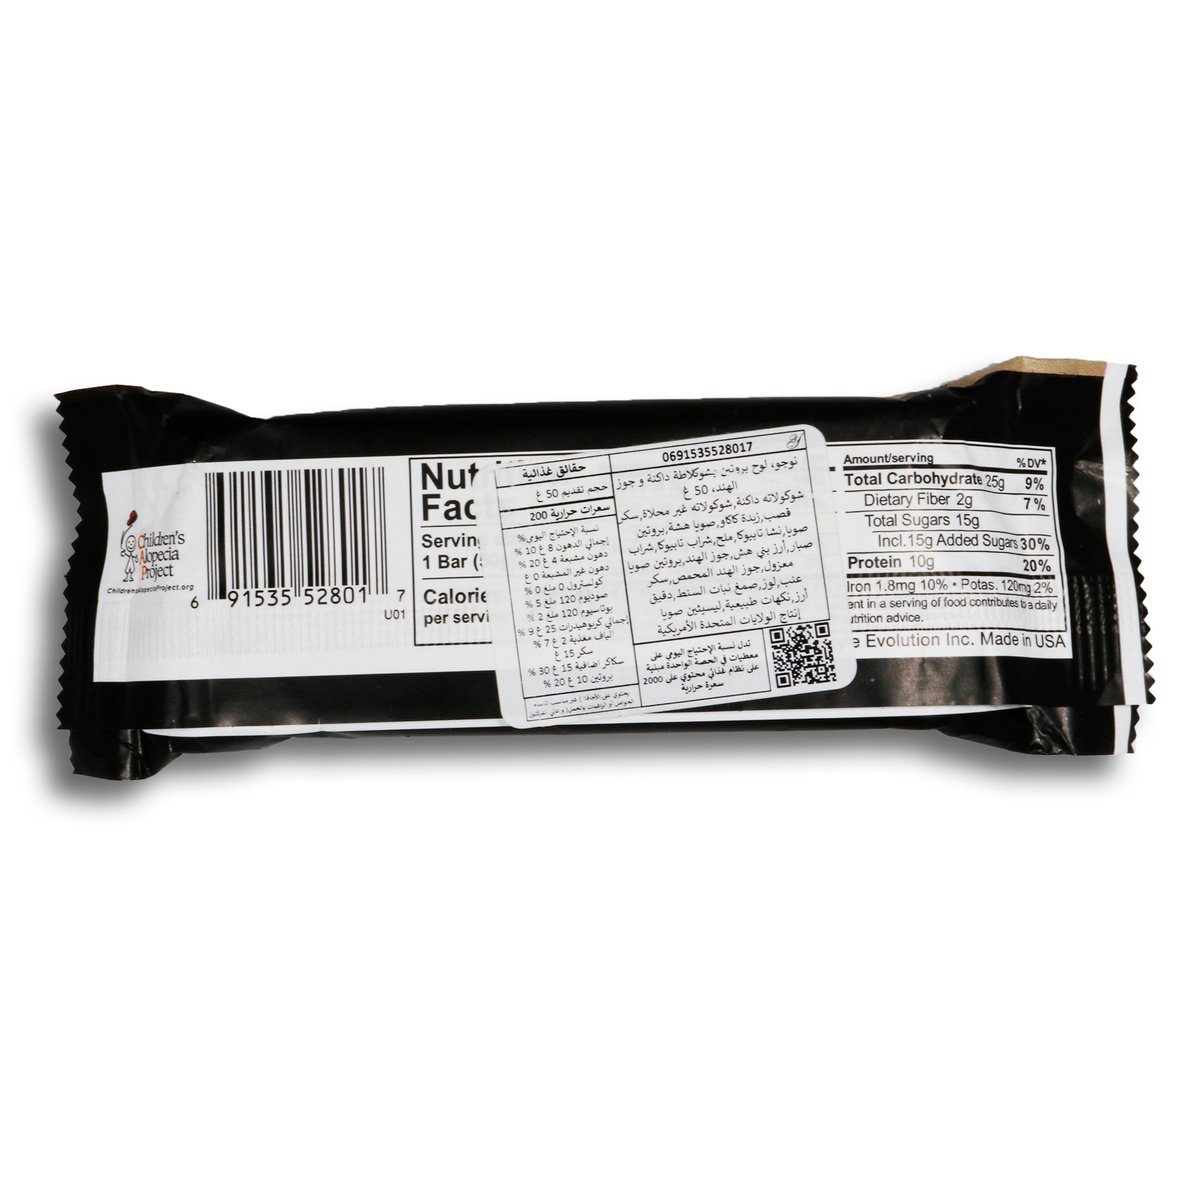 Nugo Protein Bar Dark Chocolate & Coconut 50 g